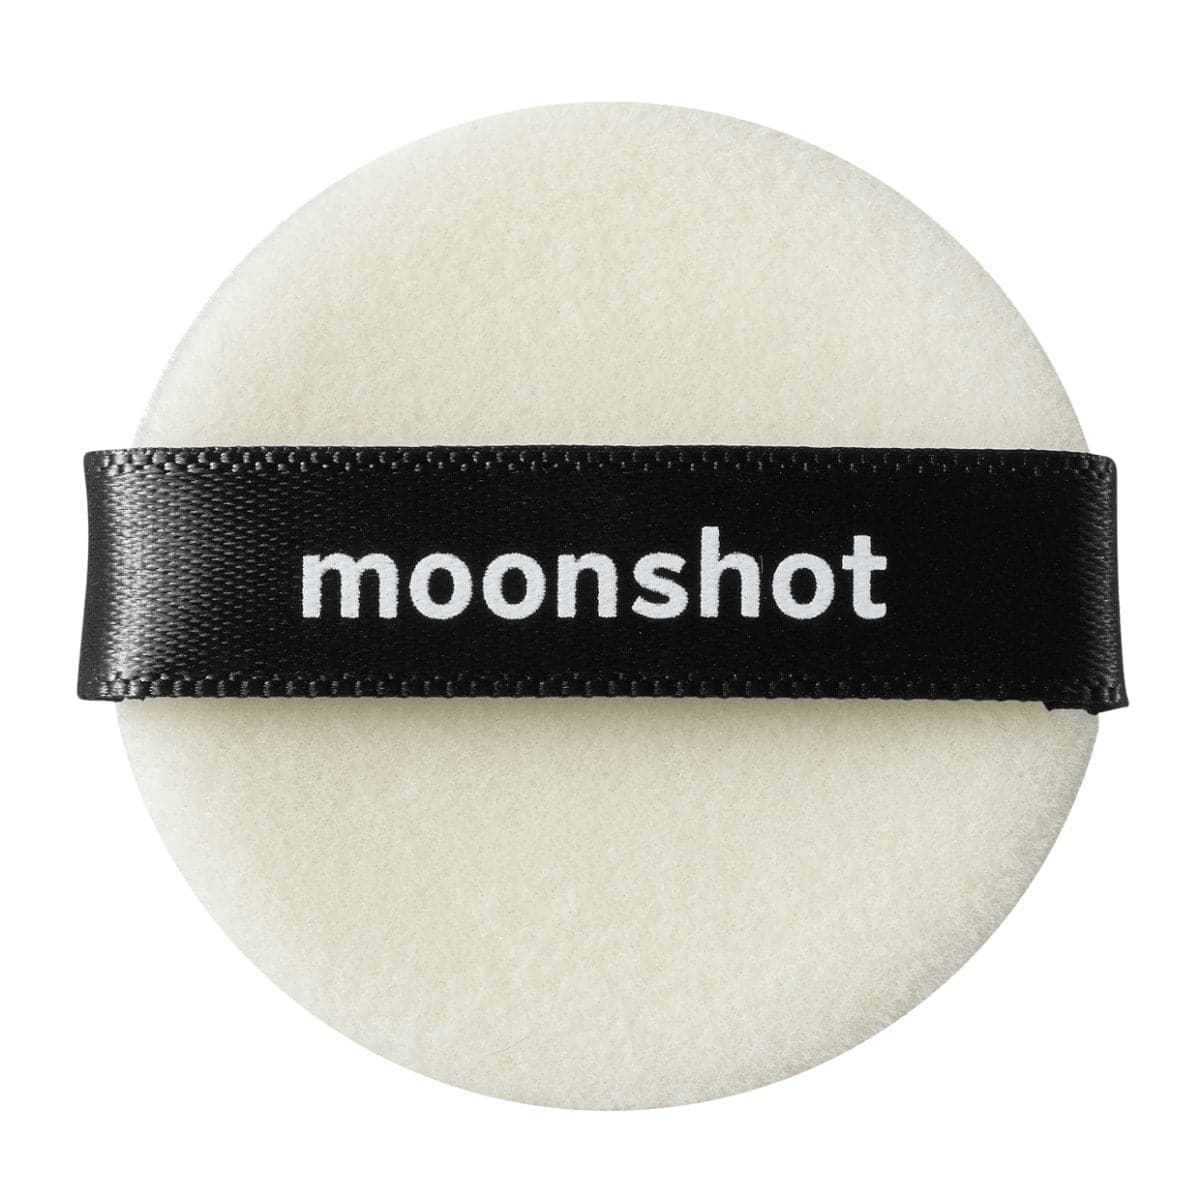 moonshot [Lisa's Pick] Powder Fixer Special Edition SPF27, PA++ - Daebak